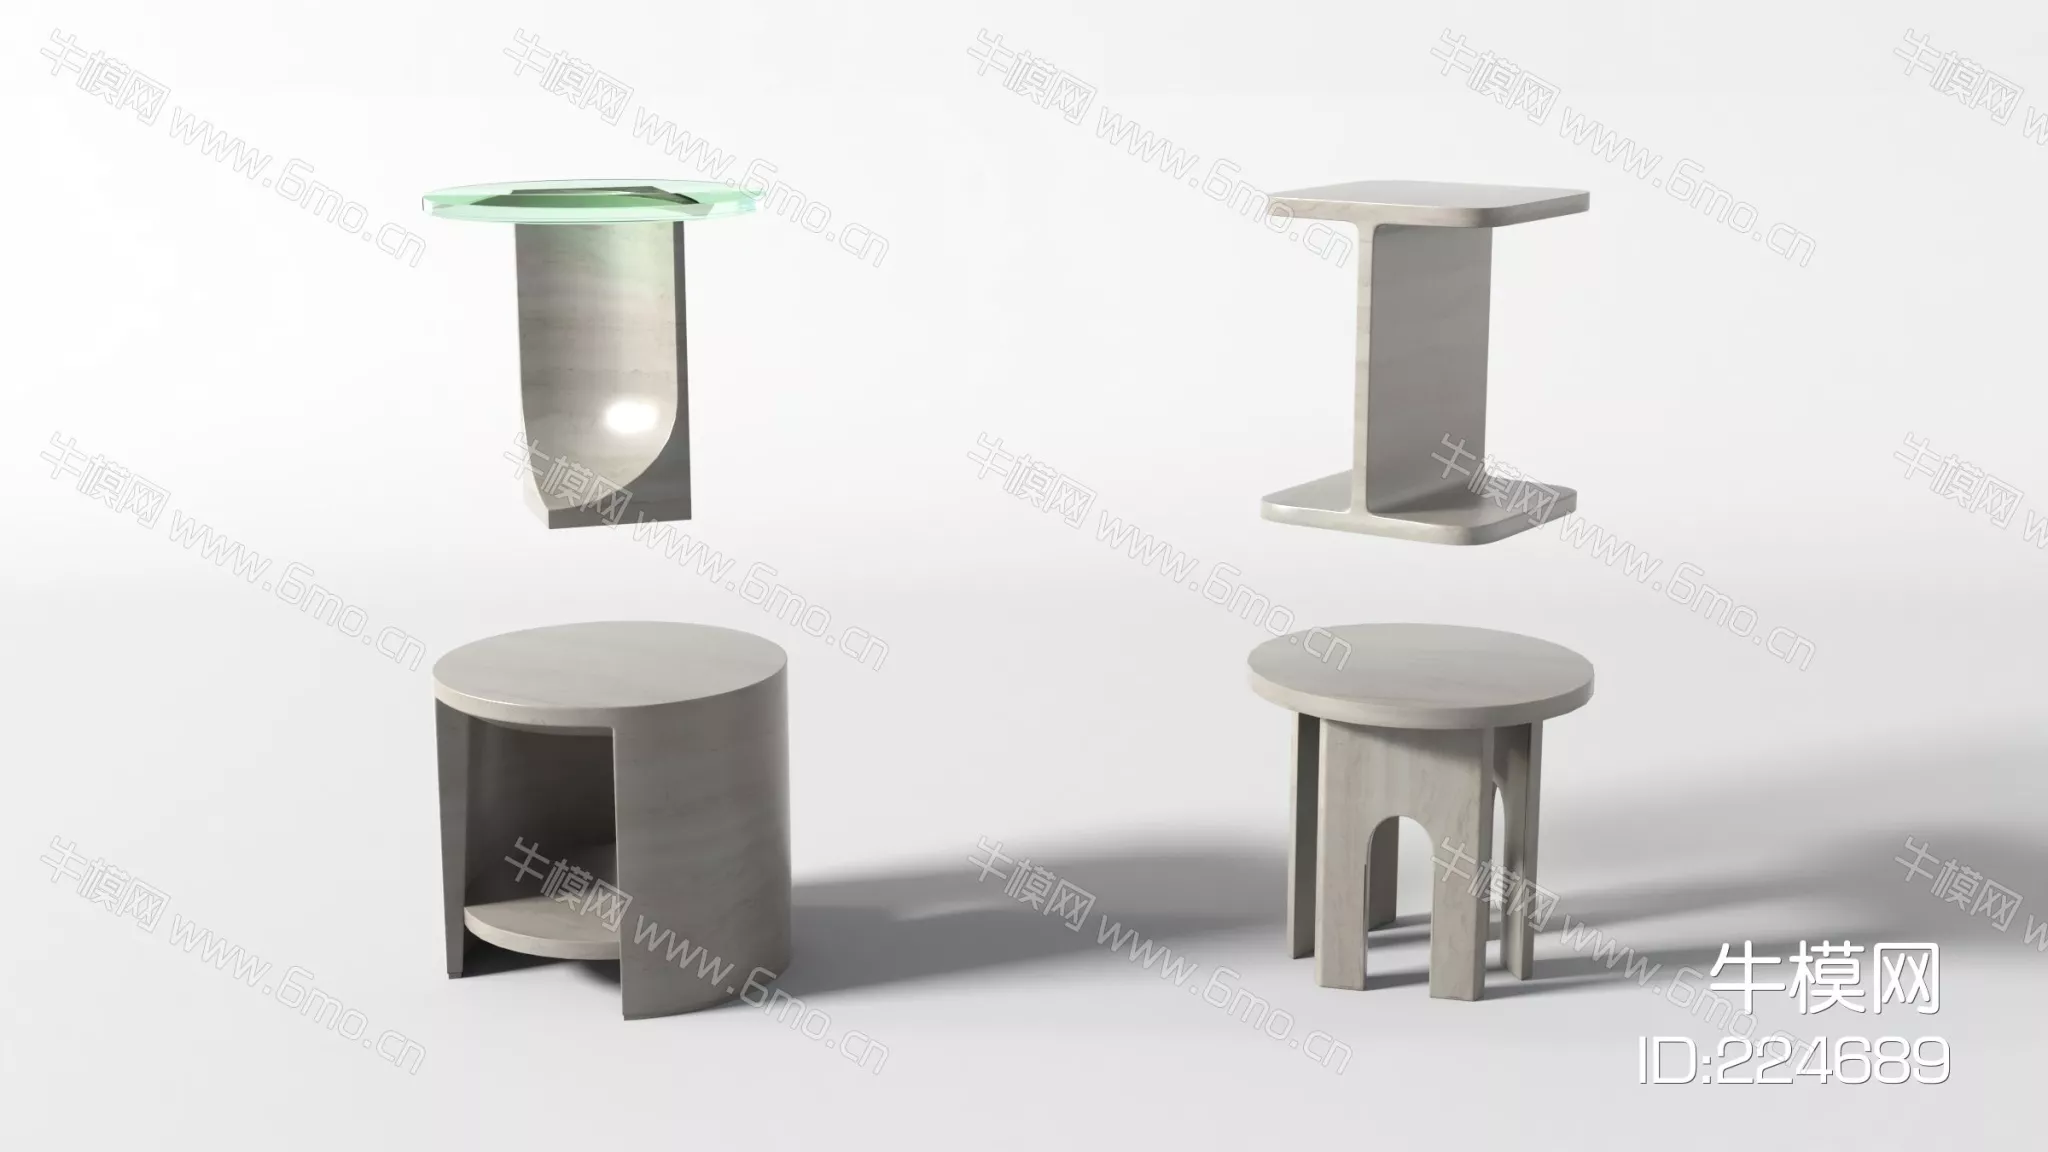 WABI SABI SIDE TABLE - SKETCHUP 3D MODEL - VRAY - 224689